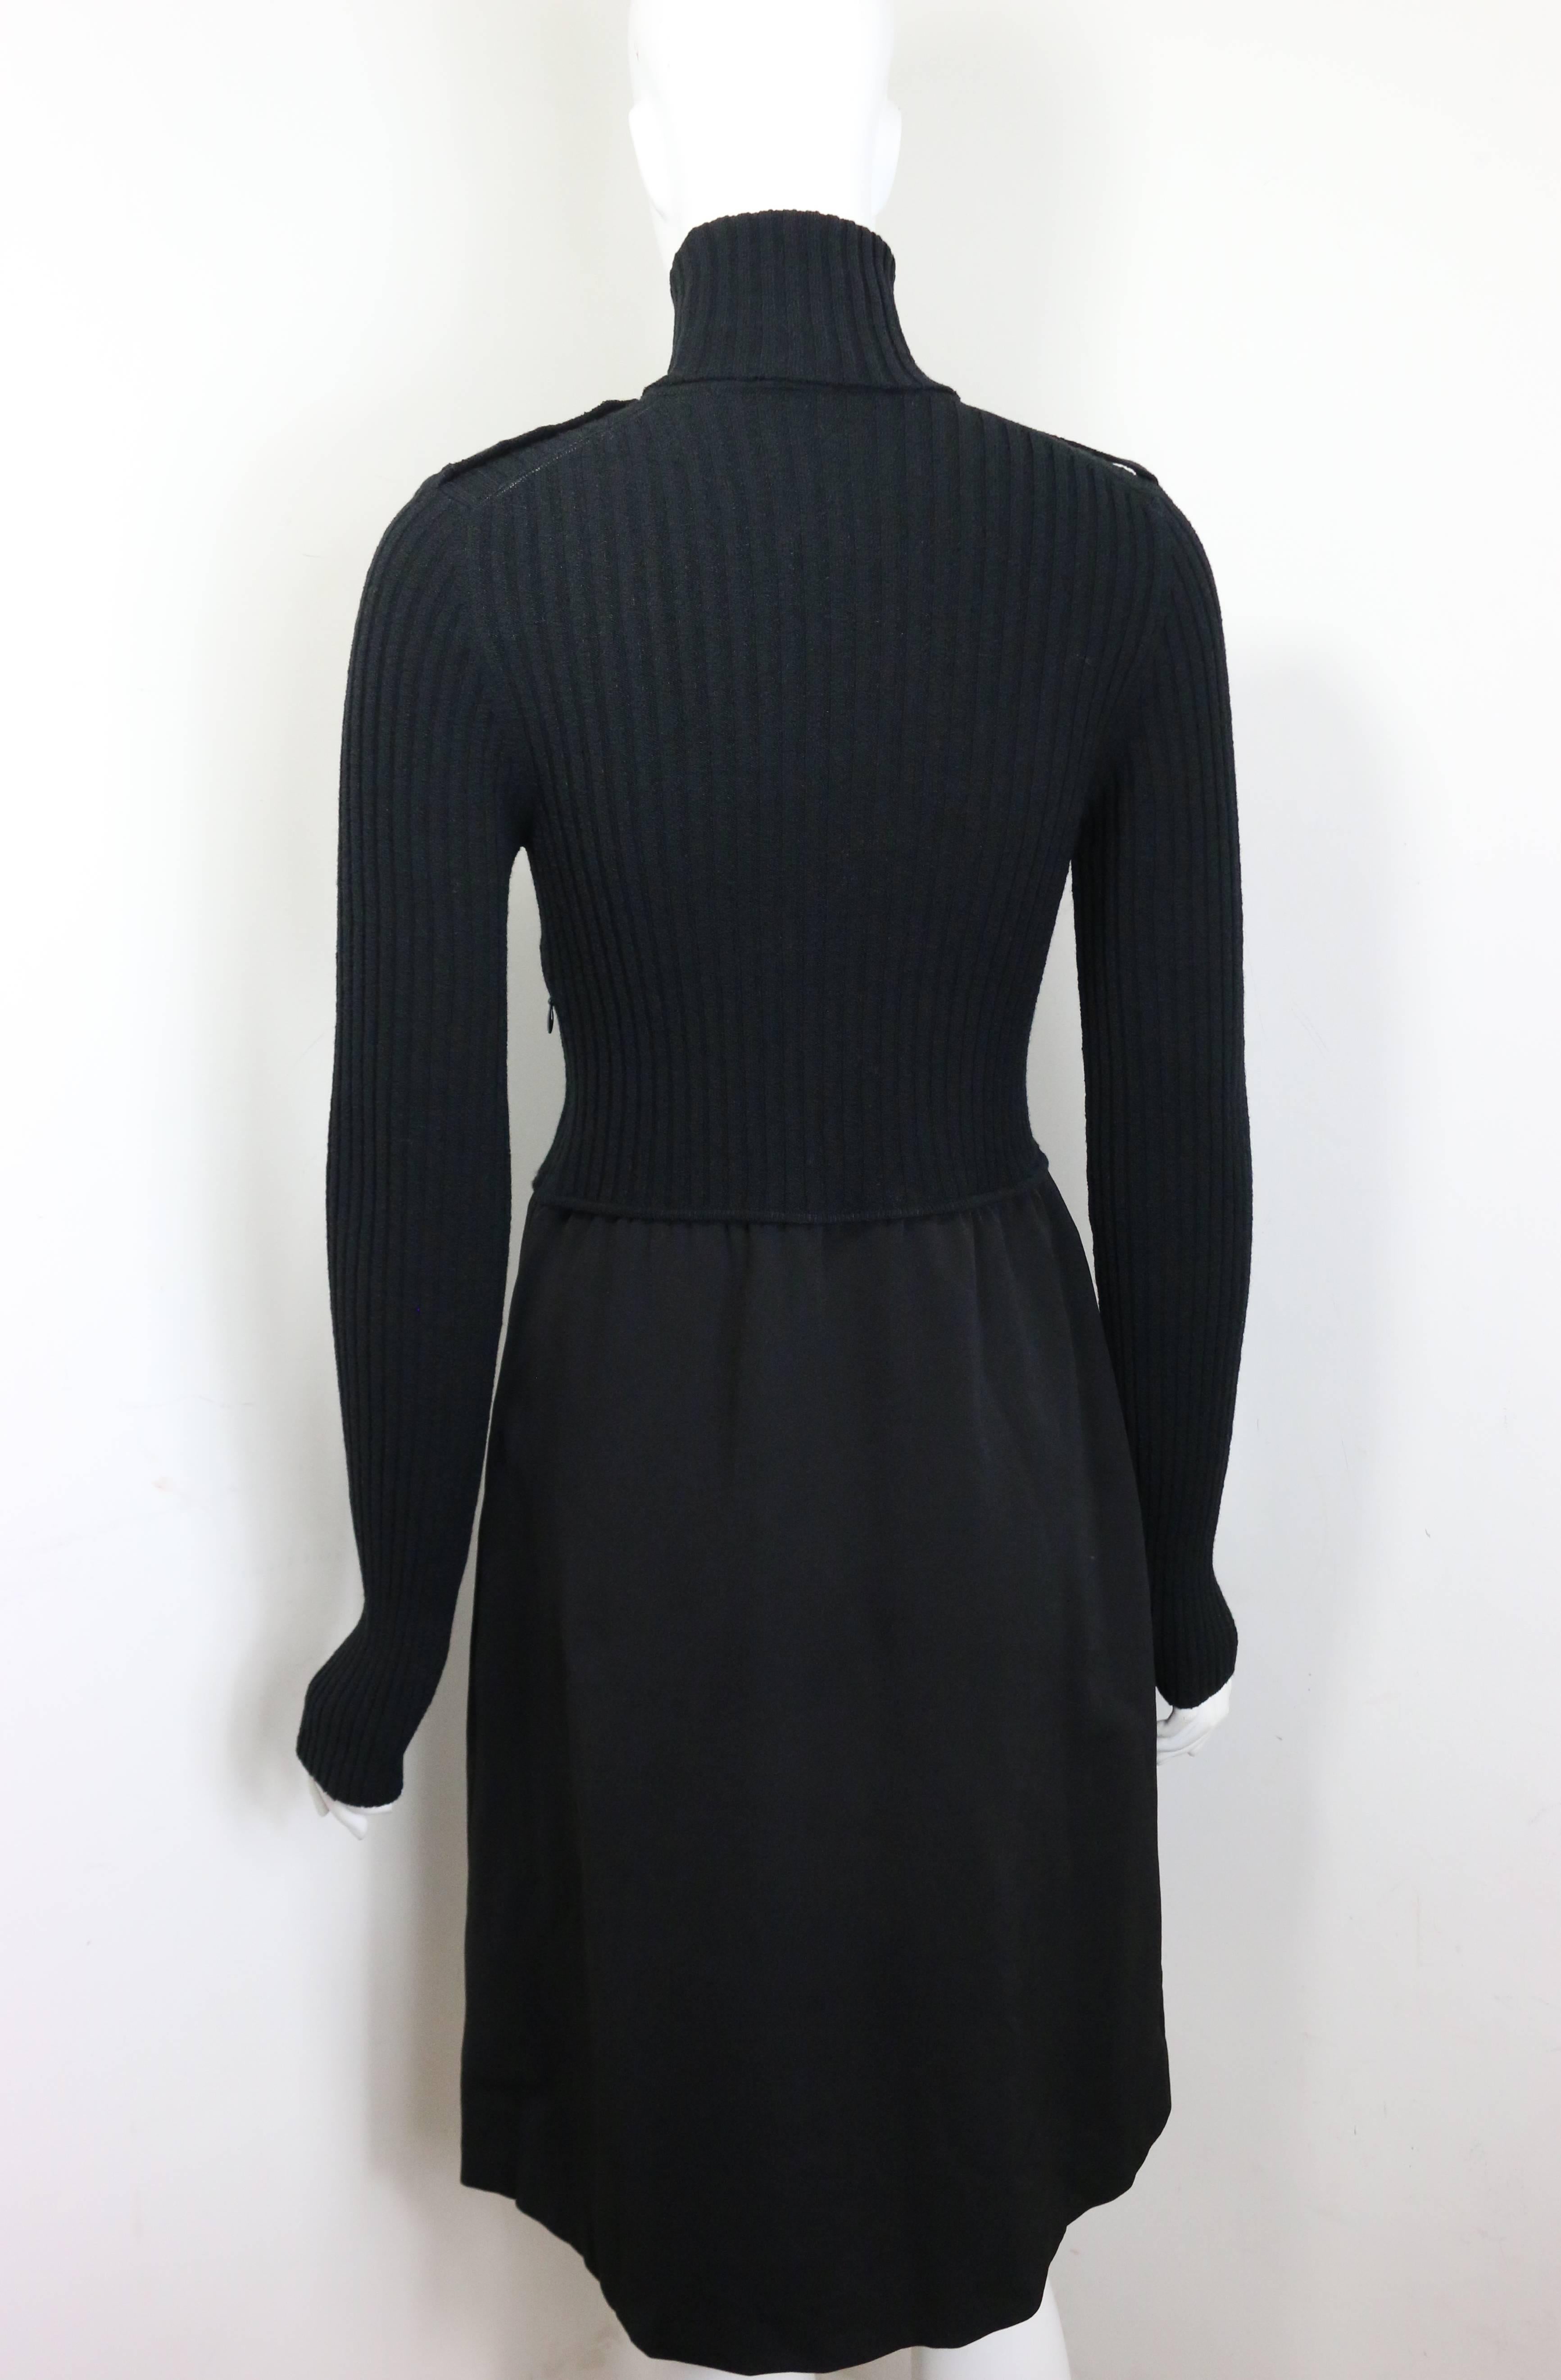 - Unworn Gucci by Tom Ford black bi fabrics long sleeves turtleneck dress from Fall 1996 collection. 

- Epaulette Shoulders. 

- Side zip closure. 

- Zipper pocket on the waistline. 

- Size 44. 

- 37% Nylon, 25% Wool, 24% Acrilica, 10% Rayon, 4%